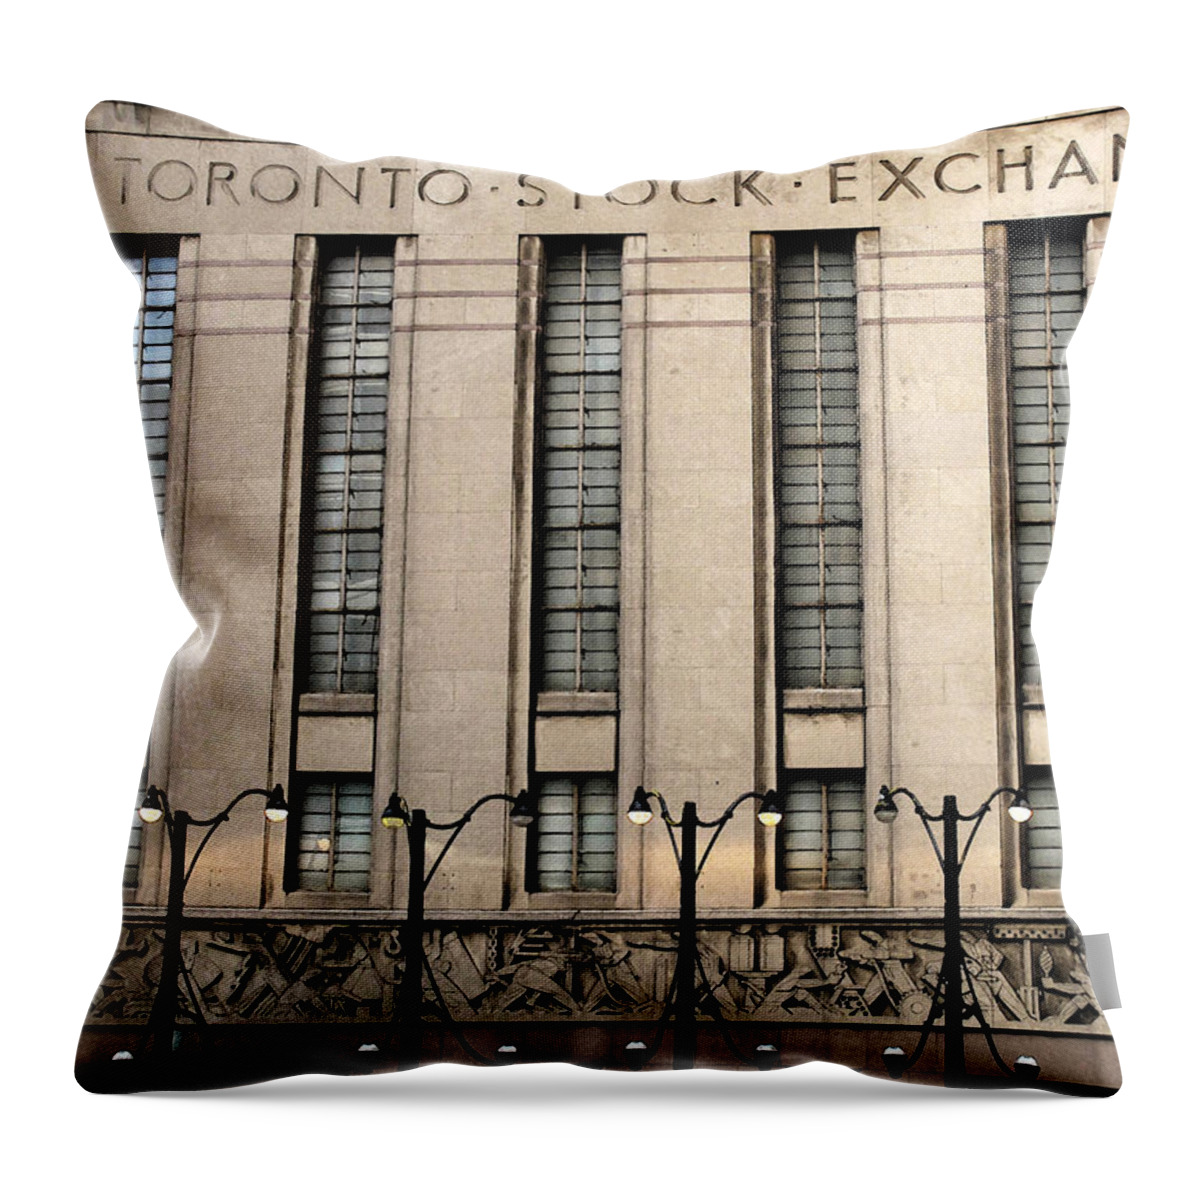 Toronto Throw Pillow featuring the photograph The Toronto Stock Exchange by Ian MacDonald